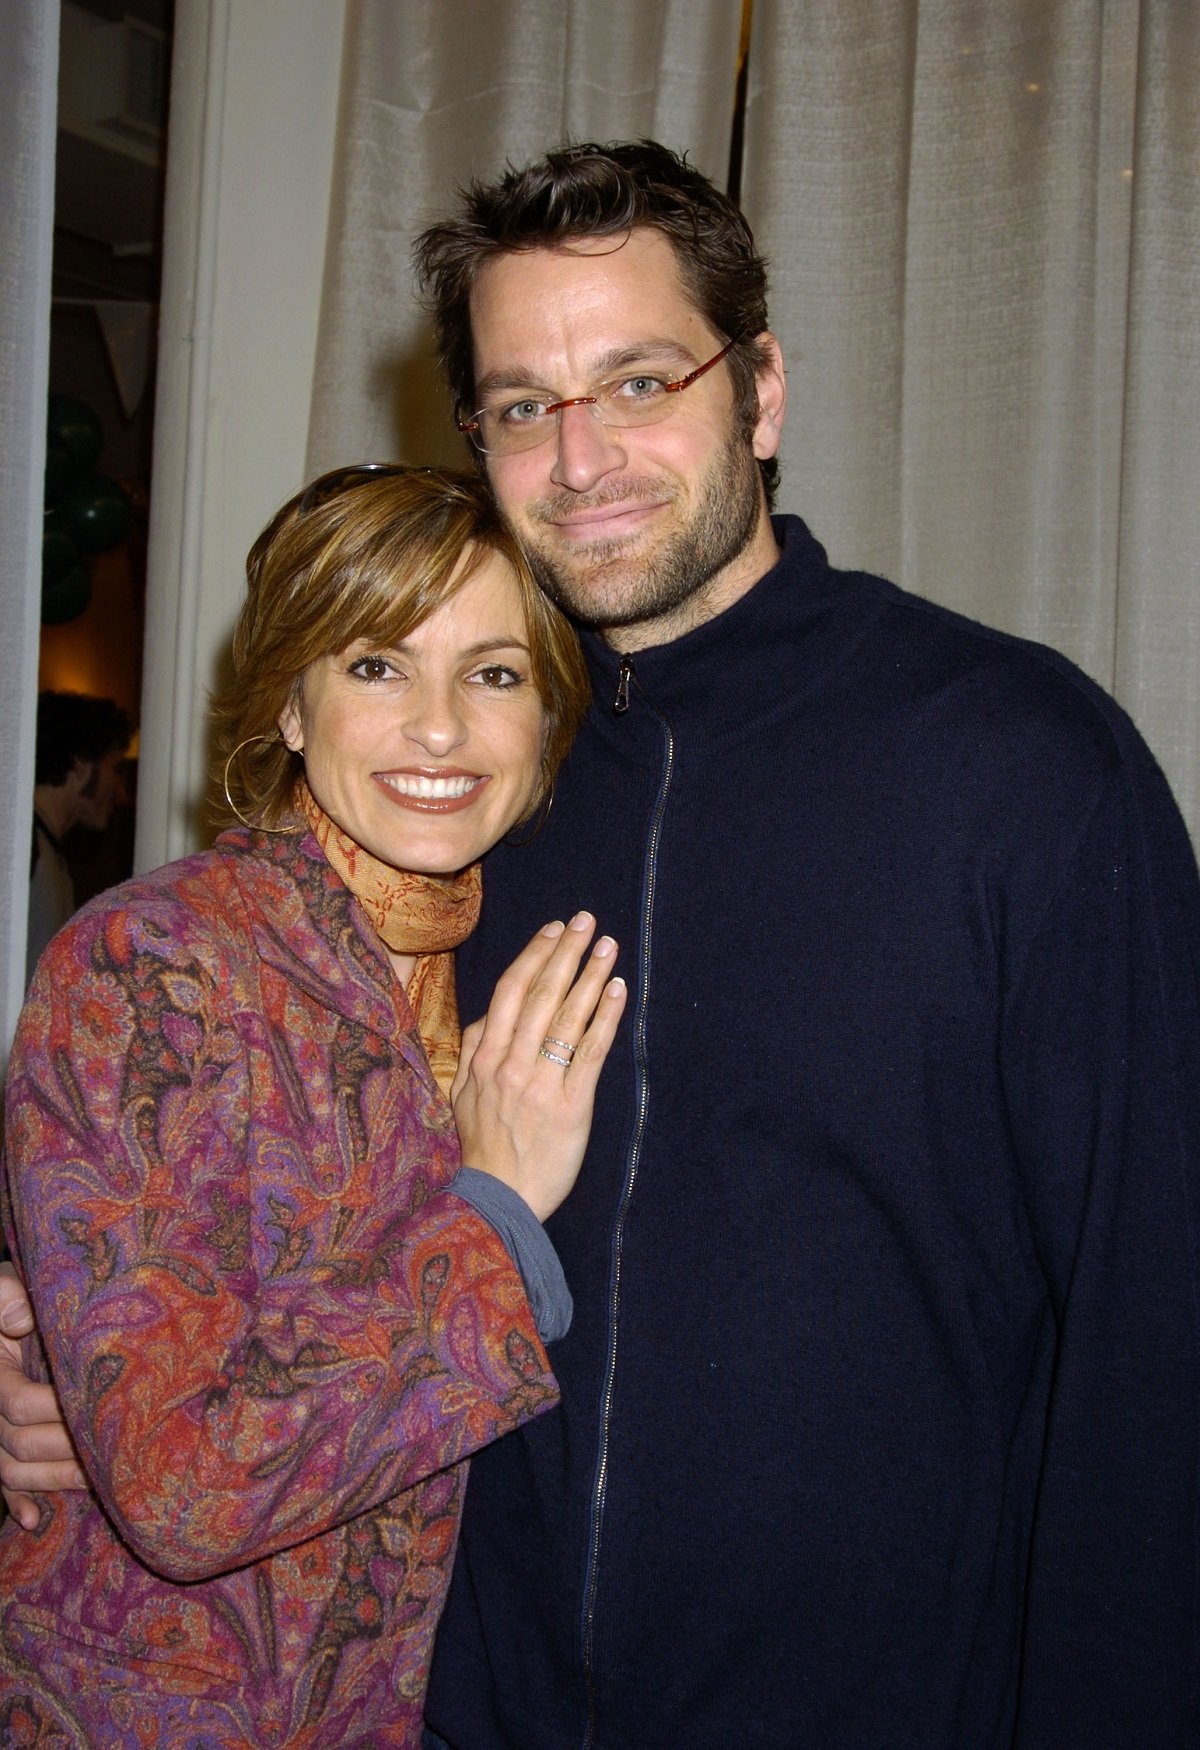 Mariska Hargitay and Peter Hermann in New York City in April 2004 | Source: Getty Images 